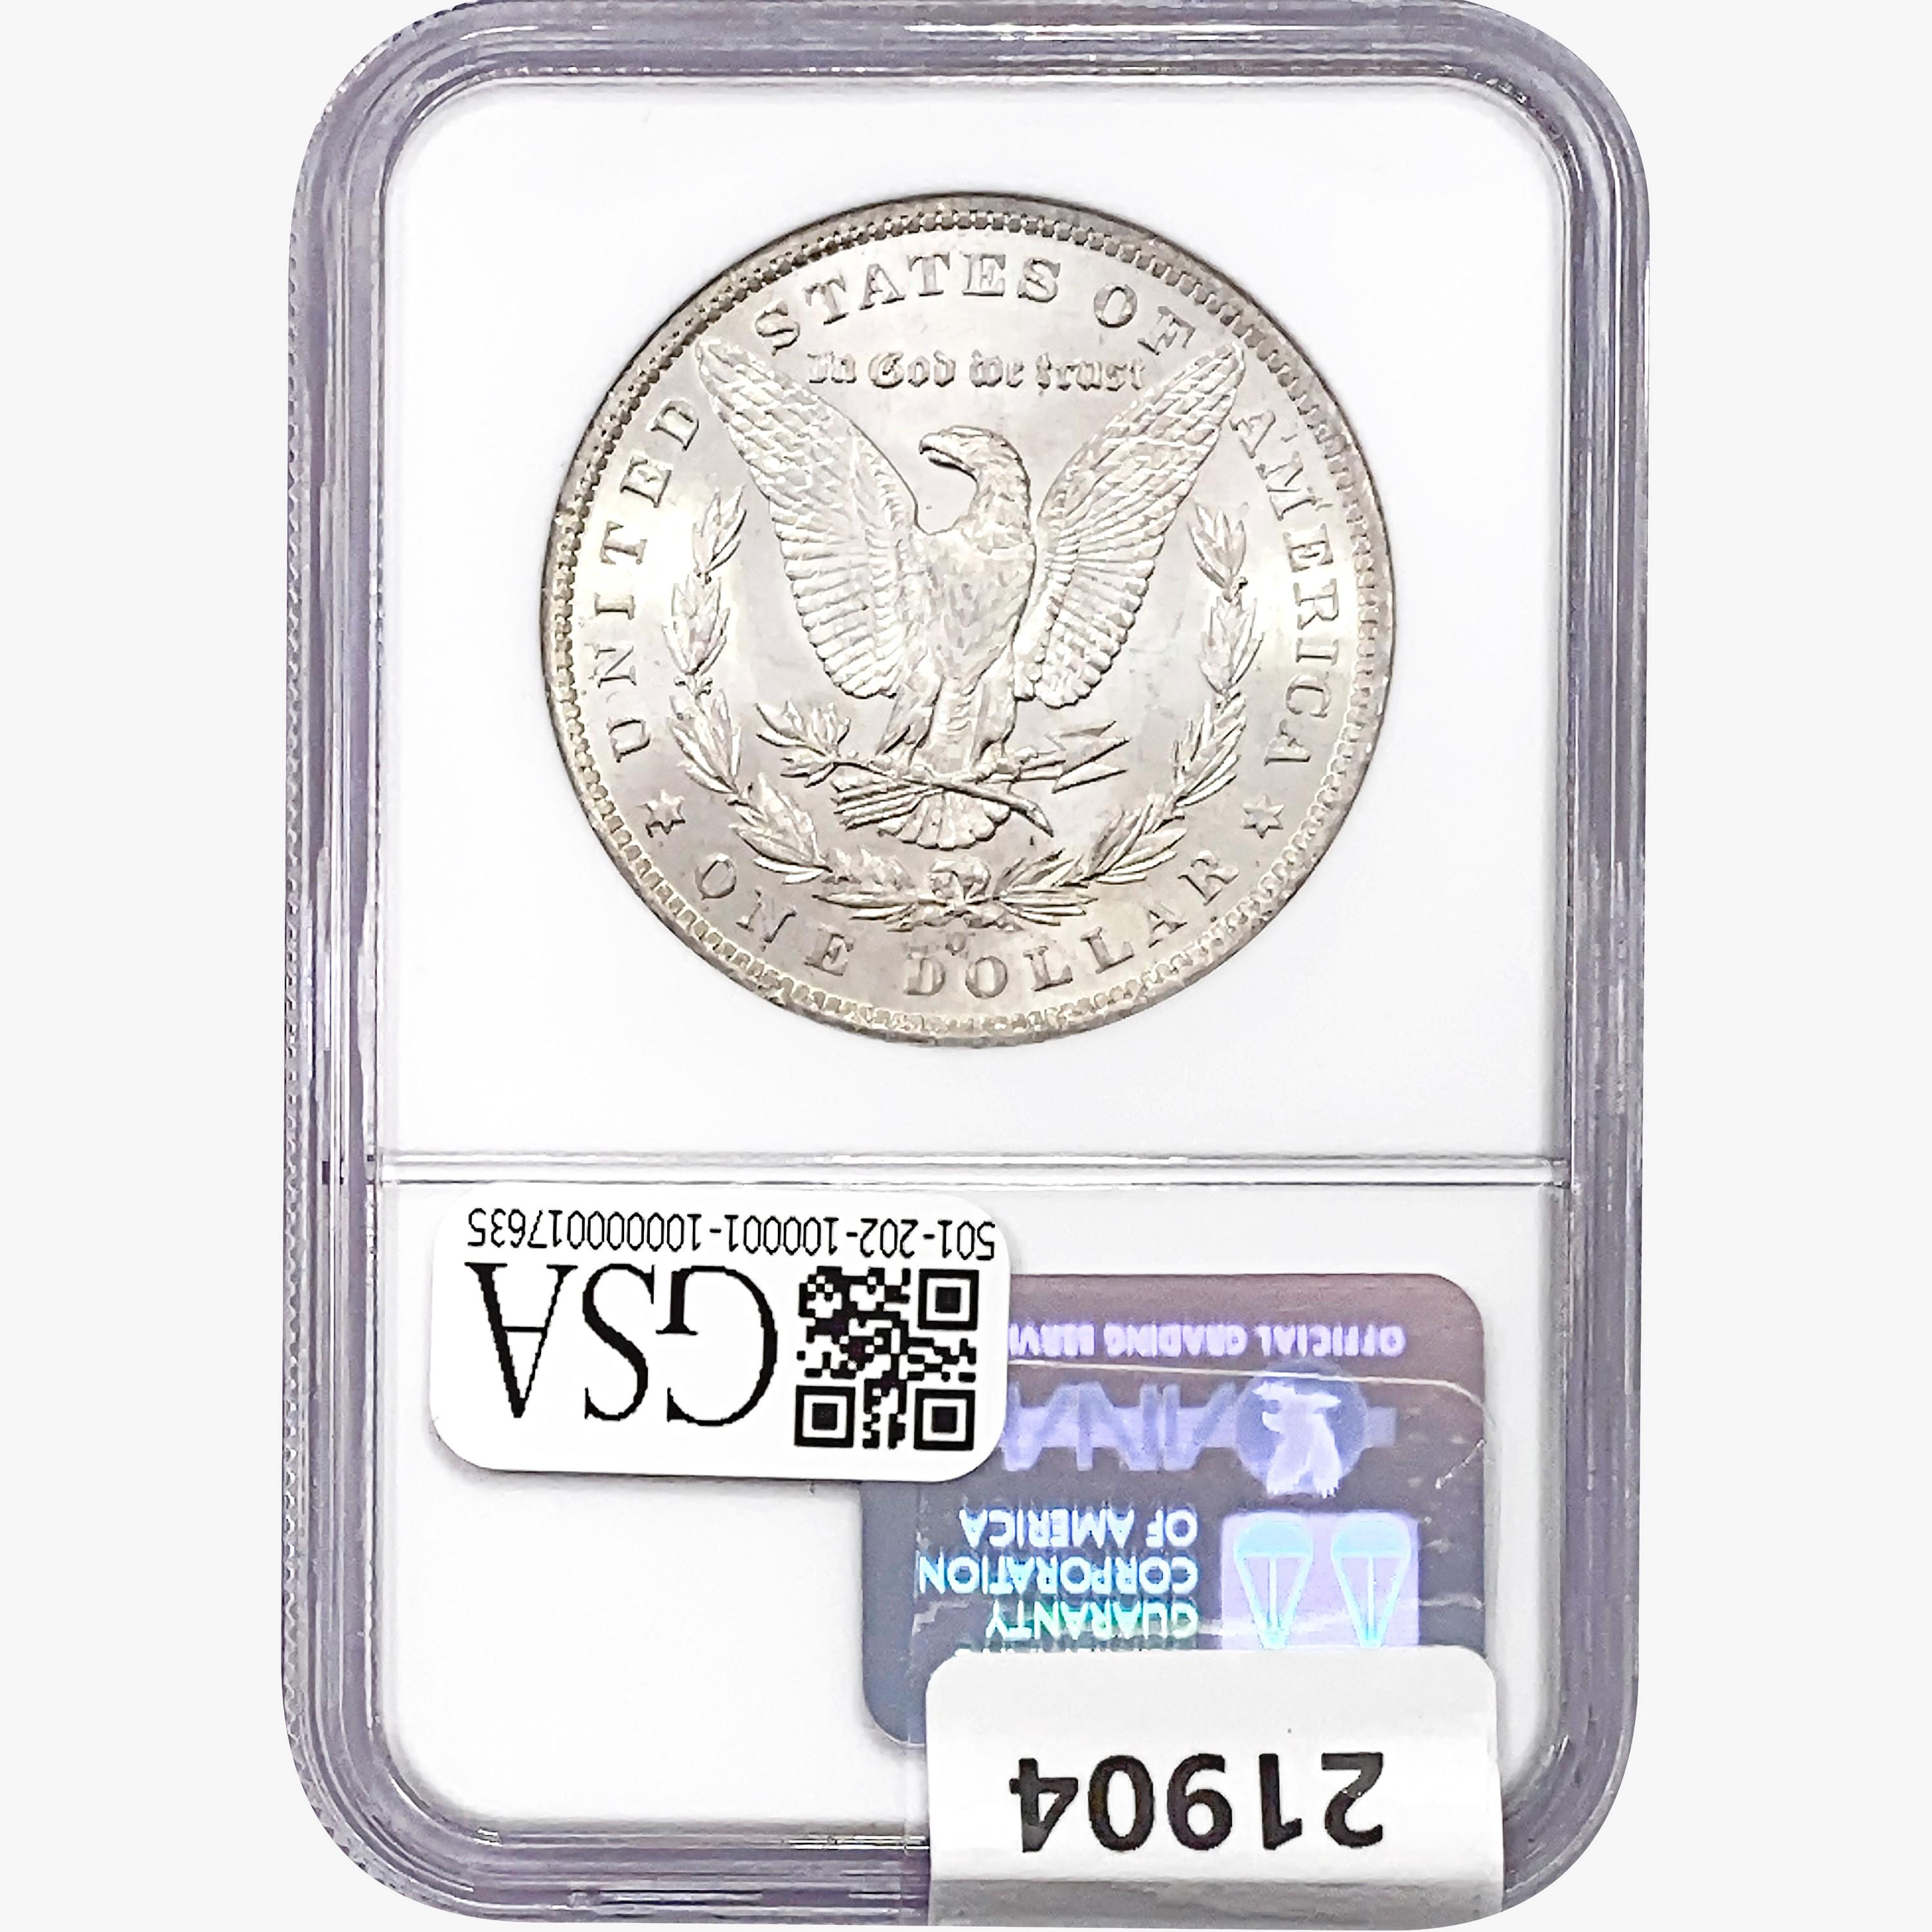 1884-O Morgan Silver Dollar NGC MS64